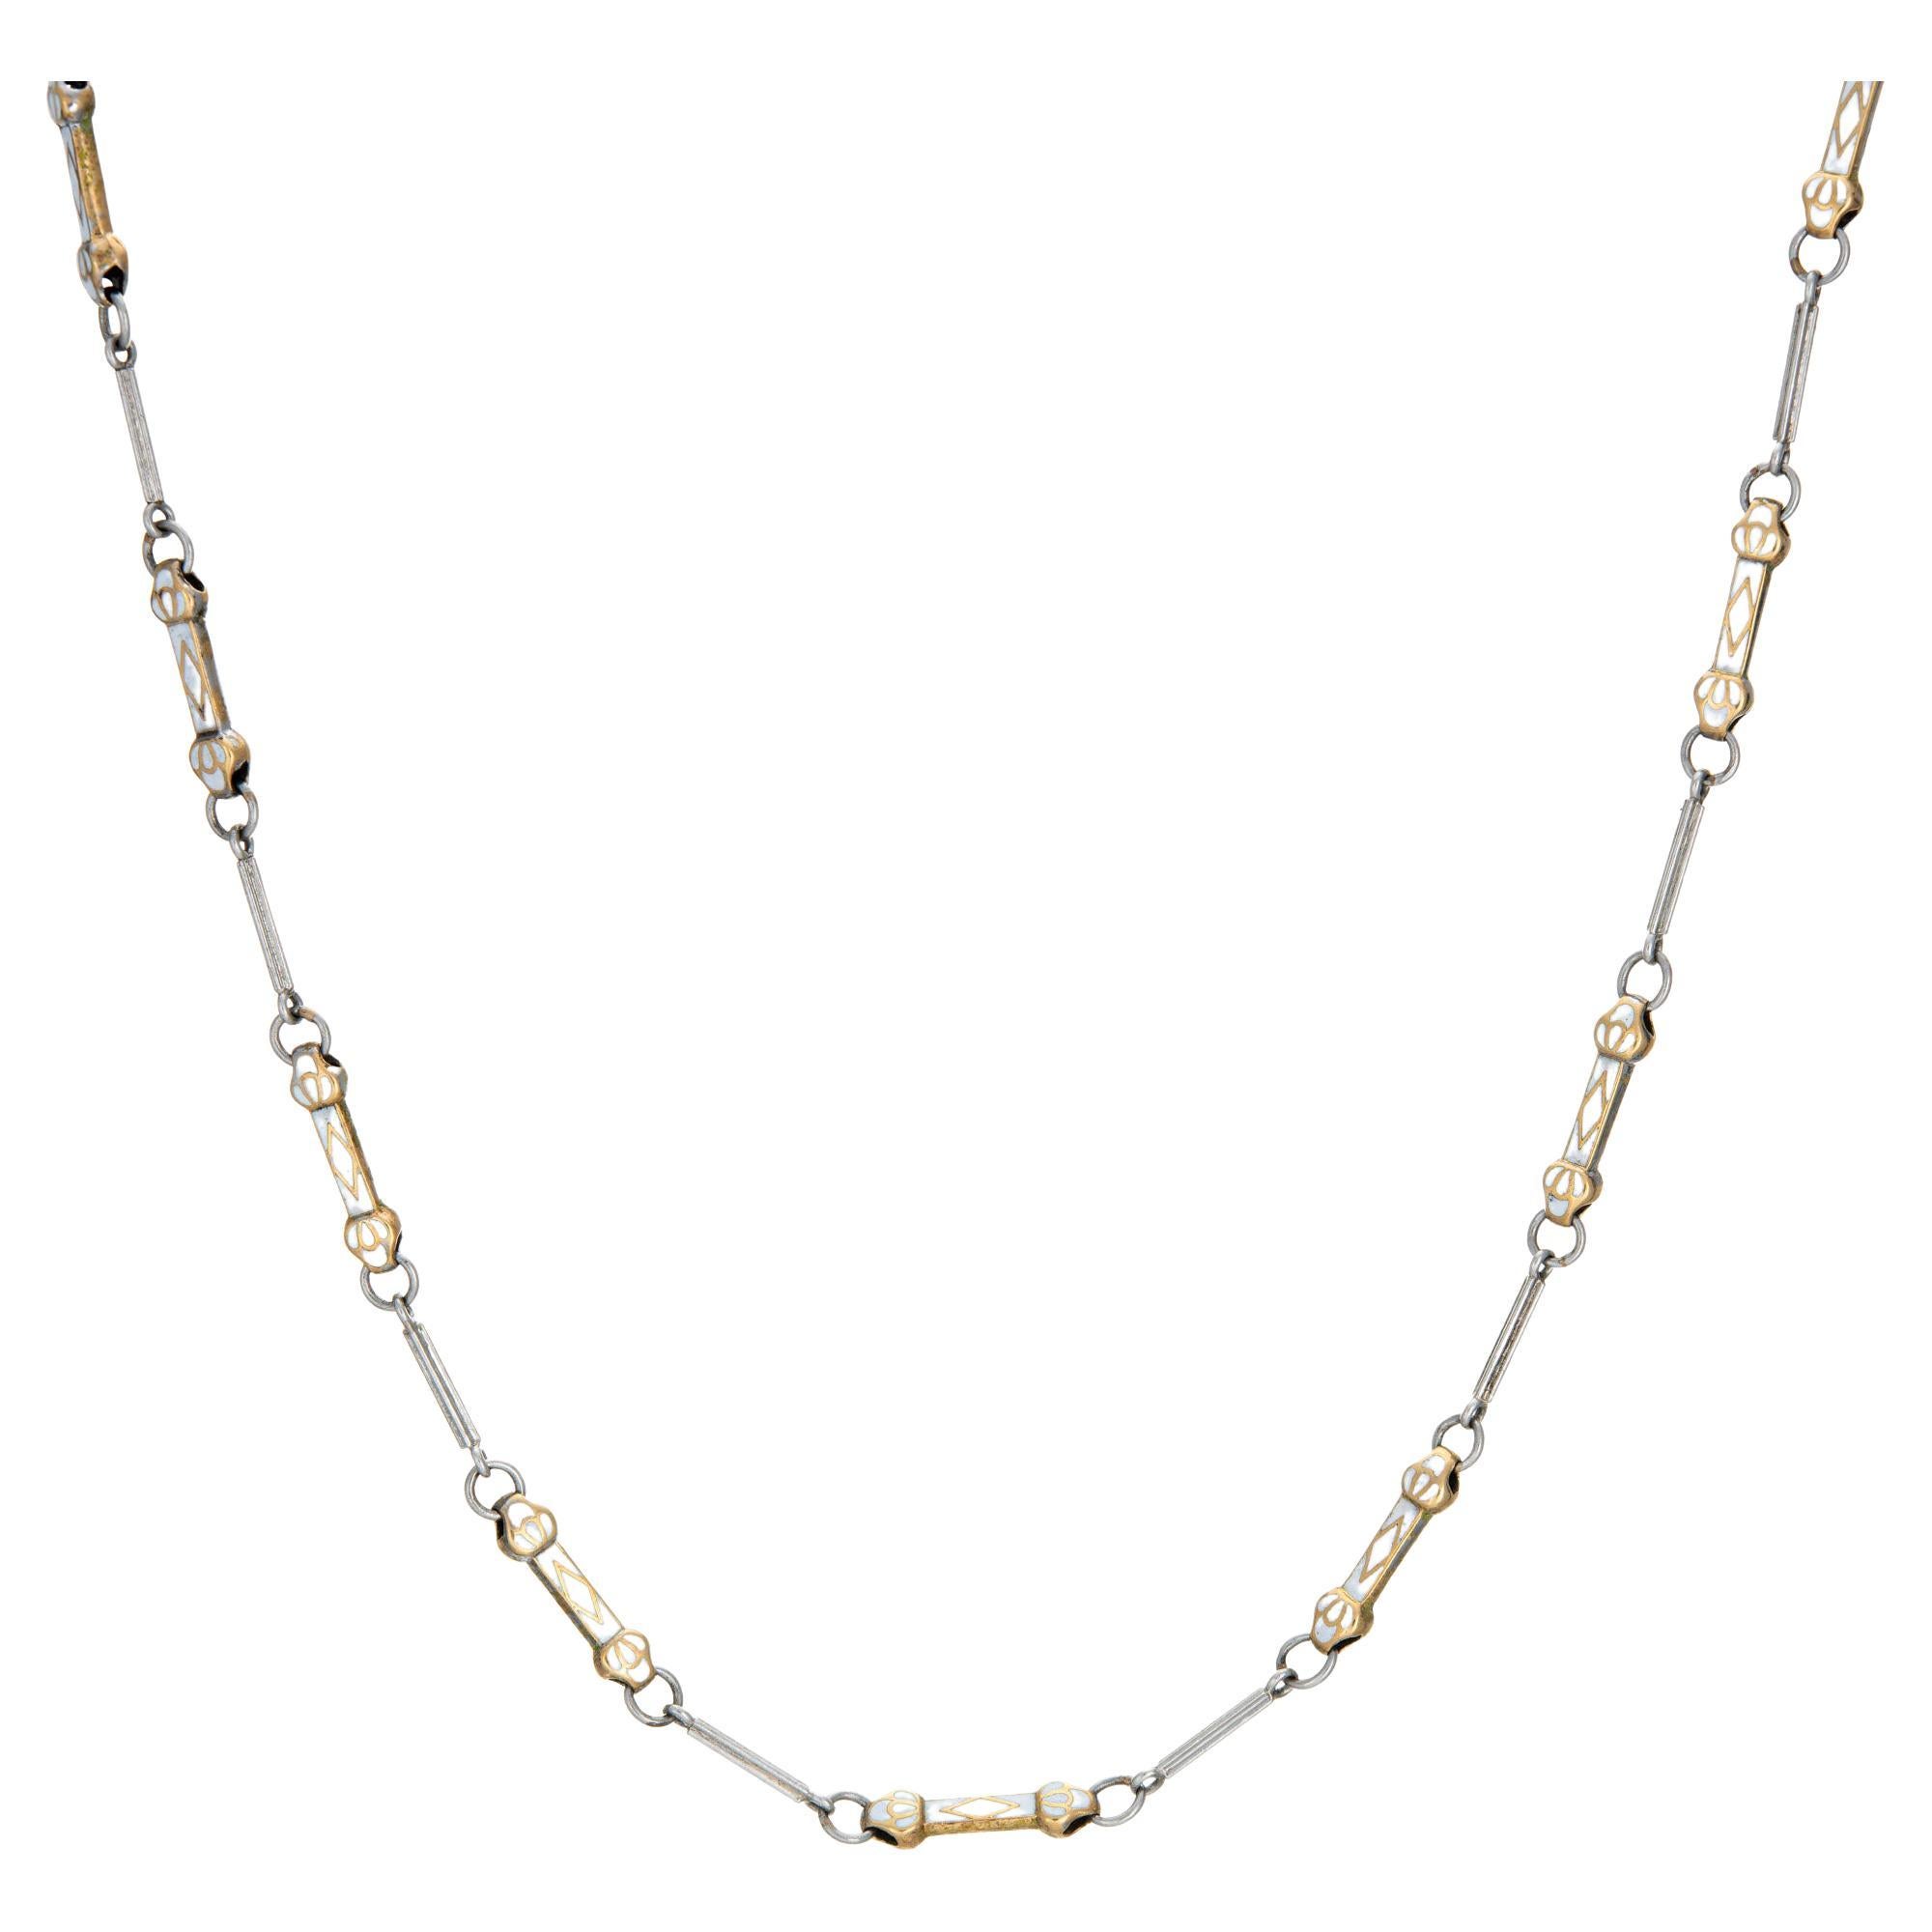 Vintage Art Deco White Enamel Necklace Platinum Fob Chain Jewelry For Sale